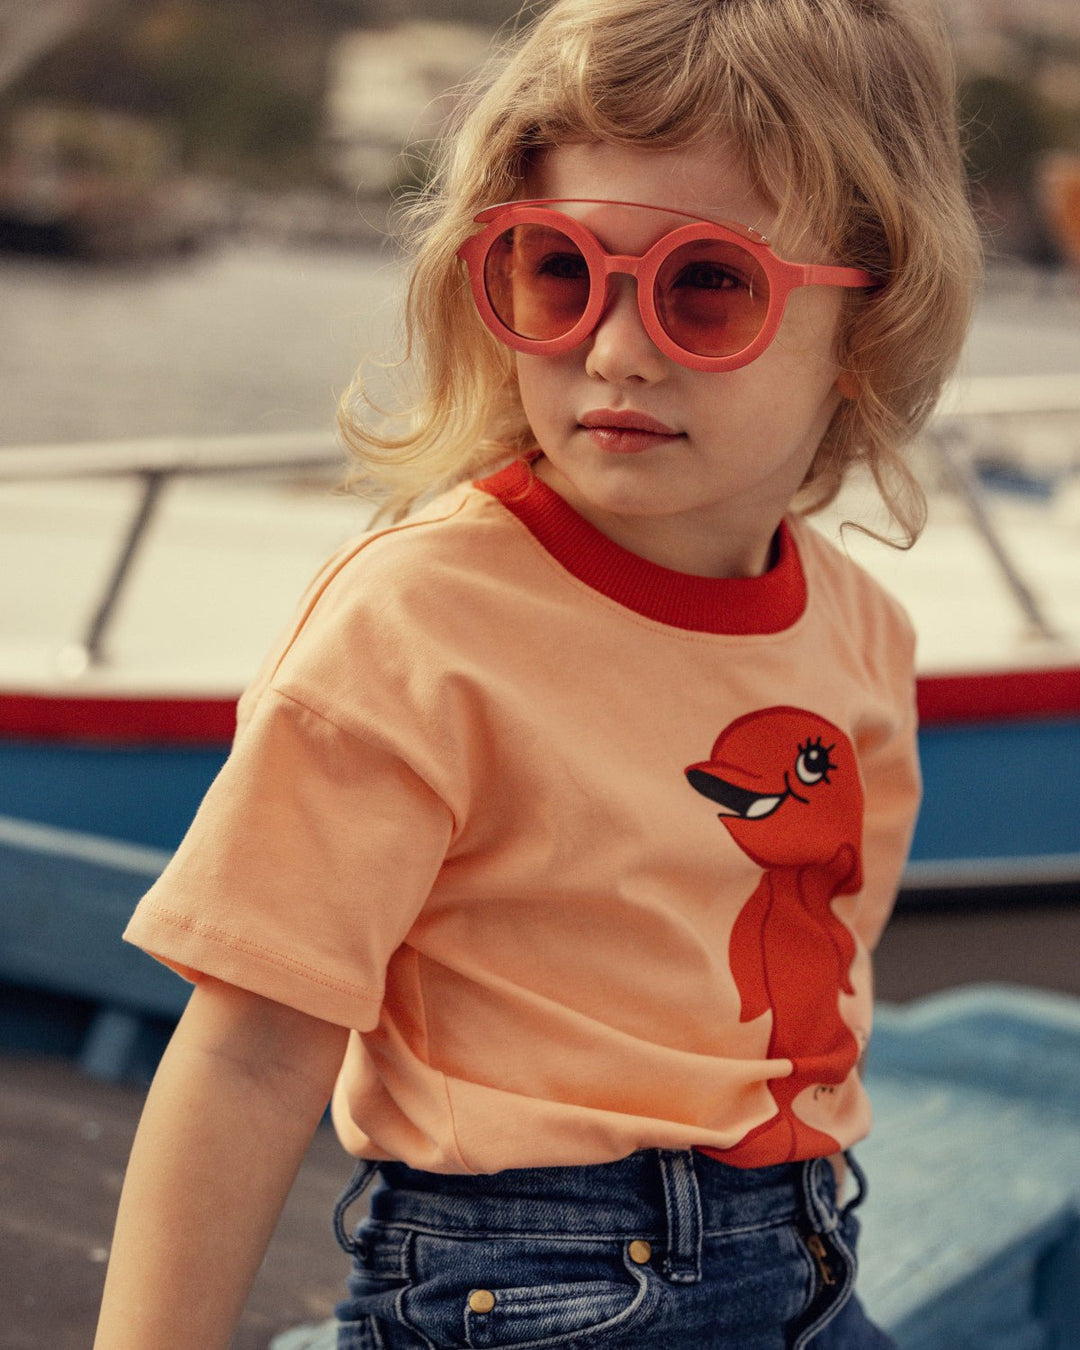 Visor Sunglasses in Pink by Mini Rodini - Petite Belle